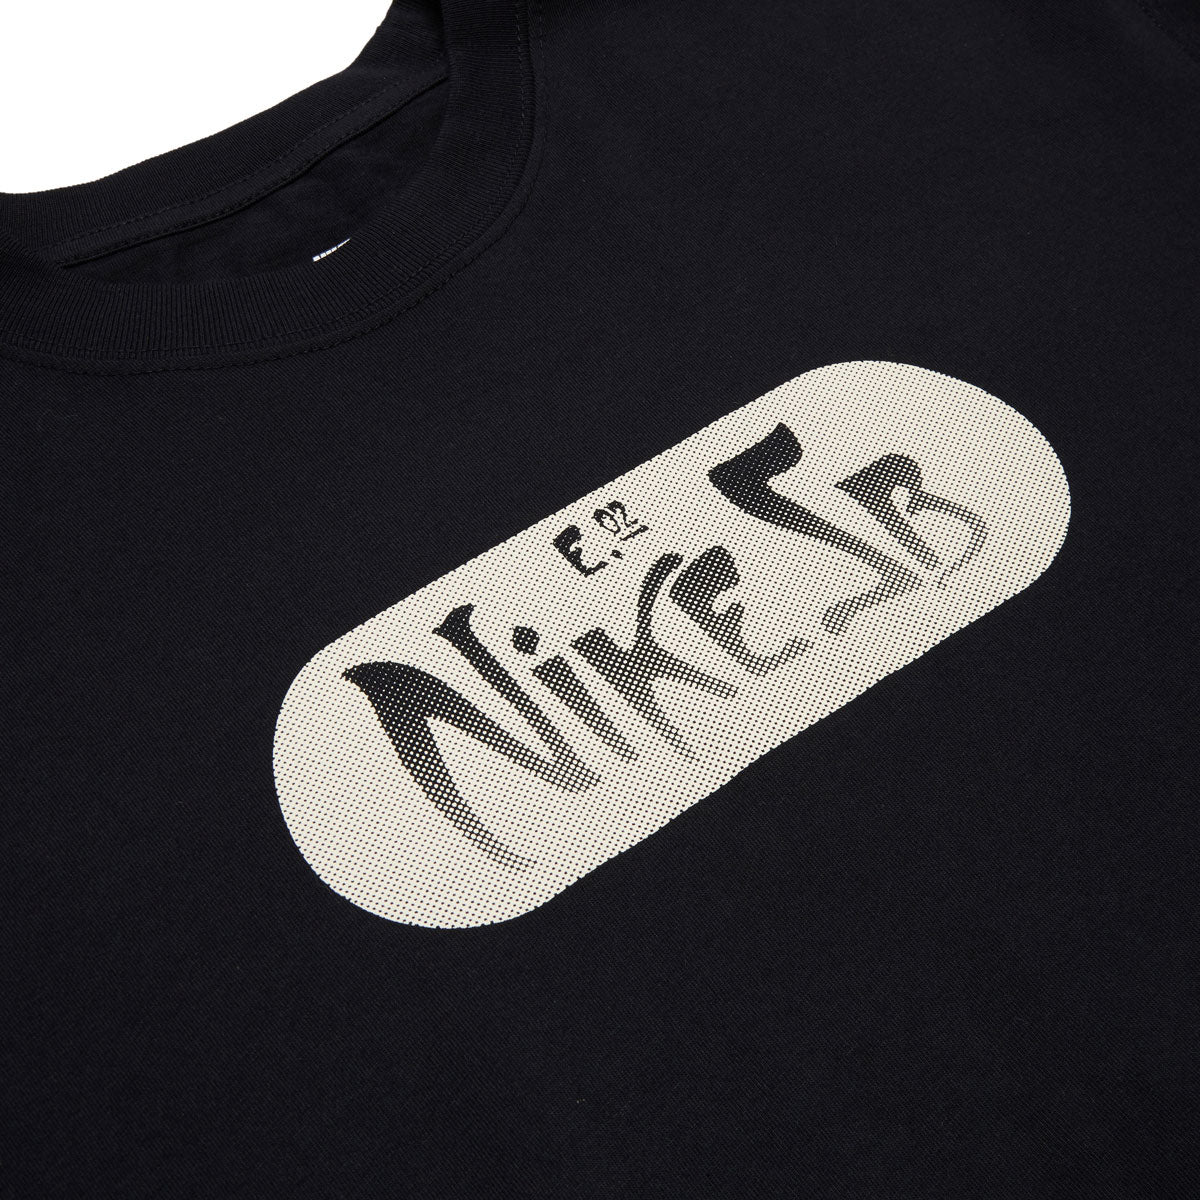 Nike SB Drip Long Sleeve T-Shirt - Black image 2